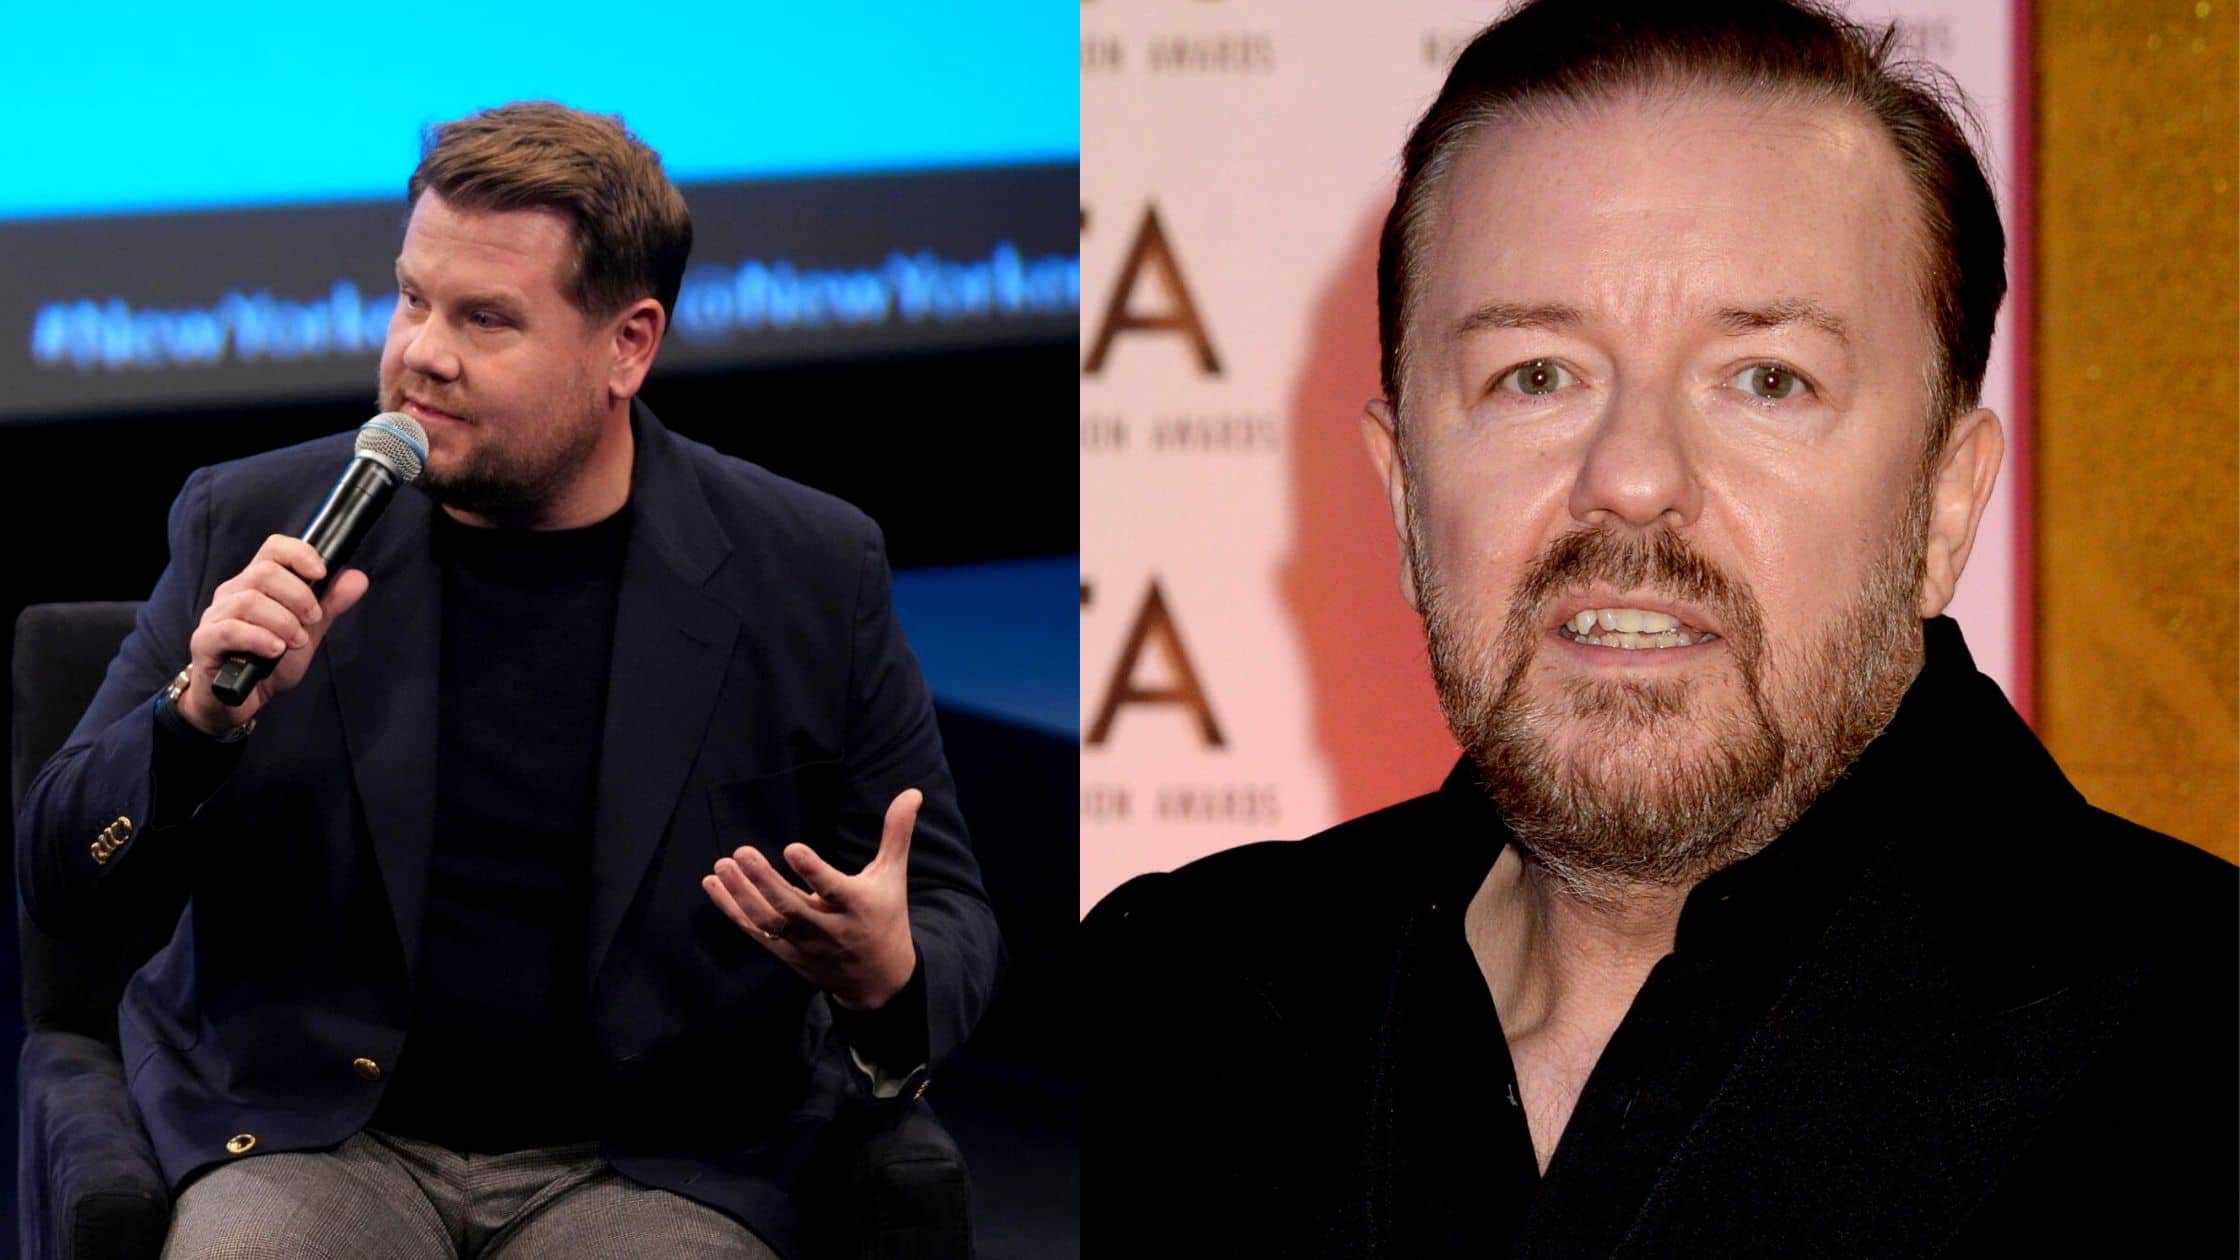 James Corden Apologizes For Plagiarizing Rick Gervais' Joke